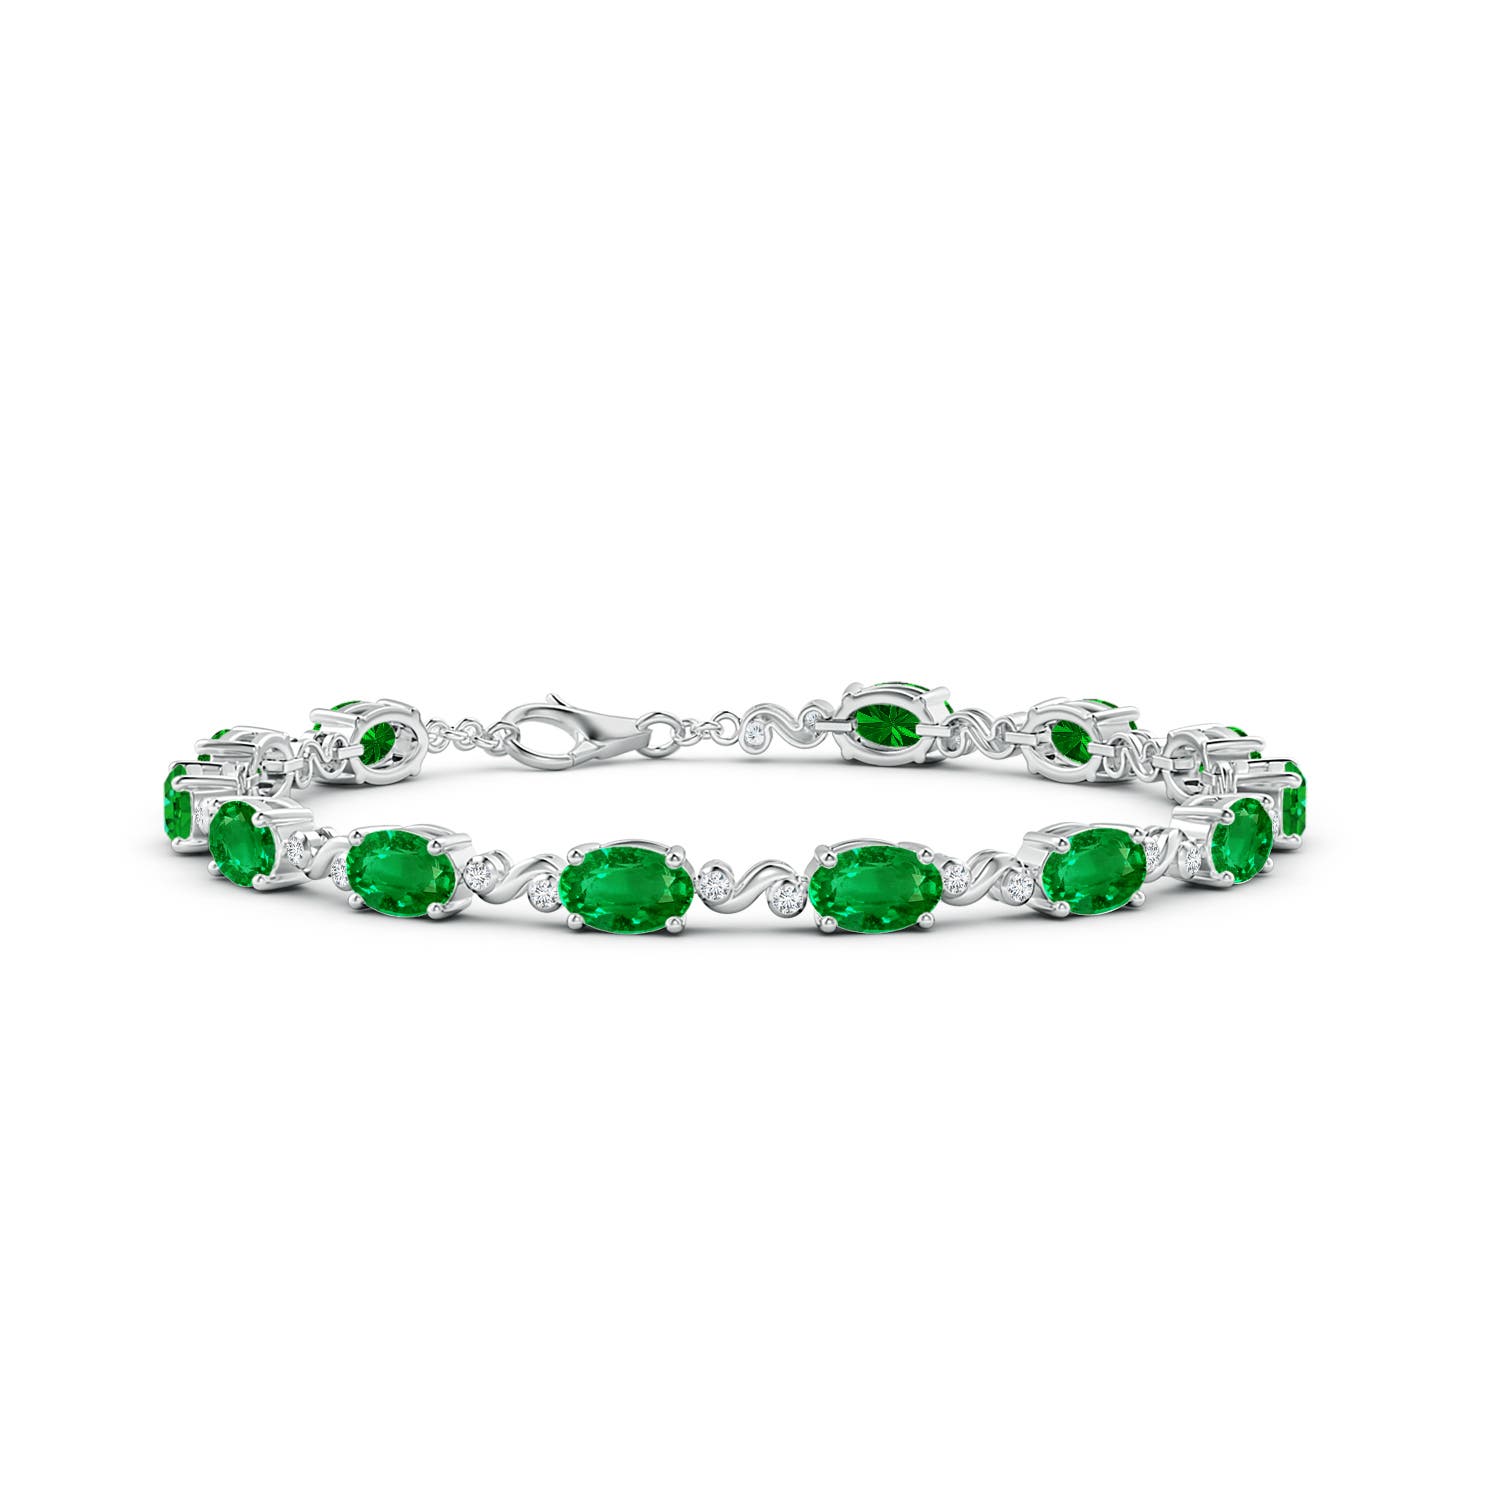 Oval emerald swirl bracelet with bezel diamonds